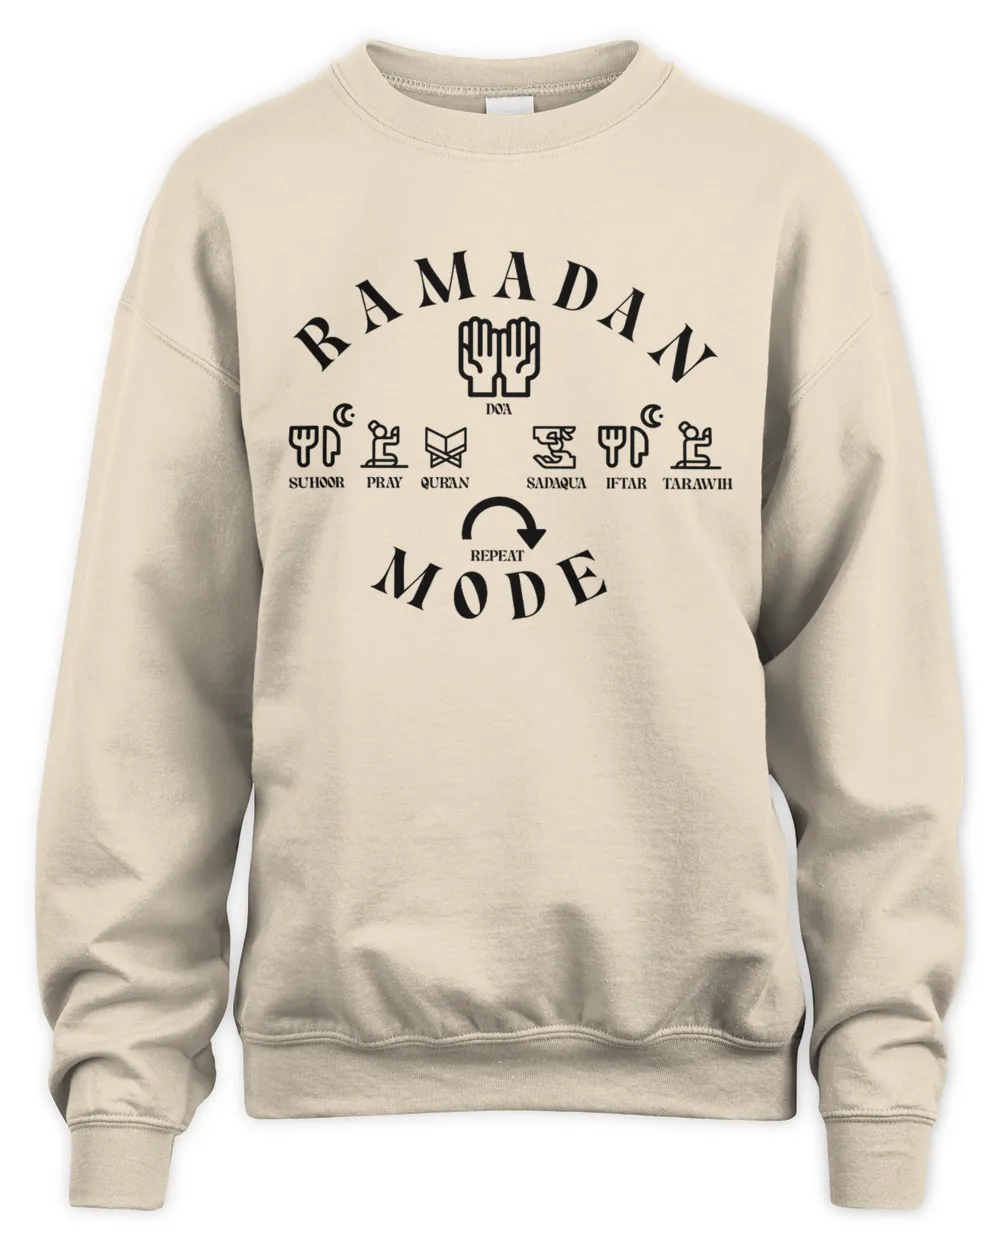 Ramadan Mode Sweatshirt, Family Ramadan Shirt, Ramadan Mubarak Shirt, Ramadan Kareem Shirt, Muslim Shirt